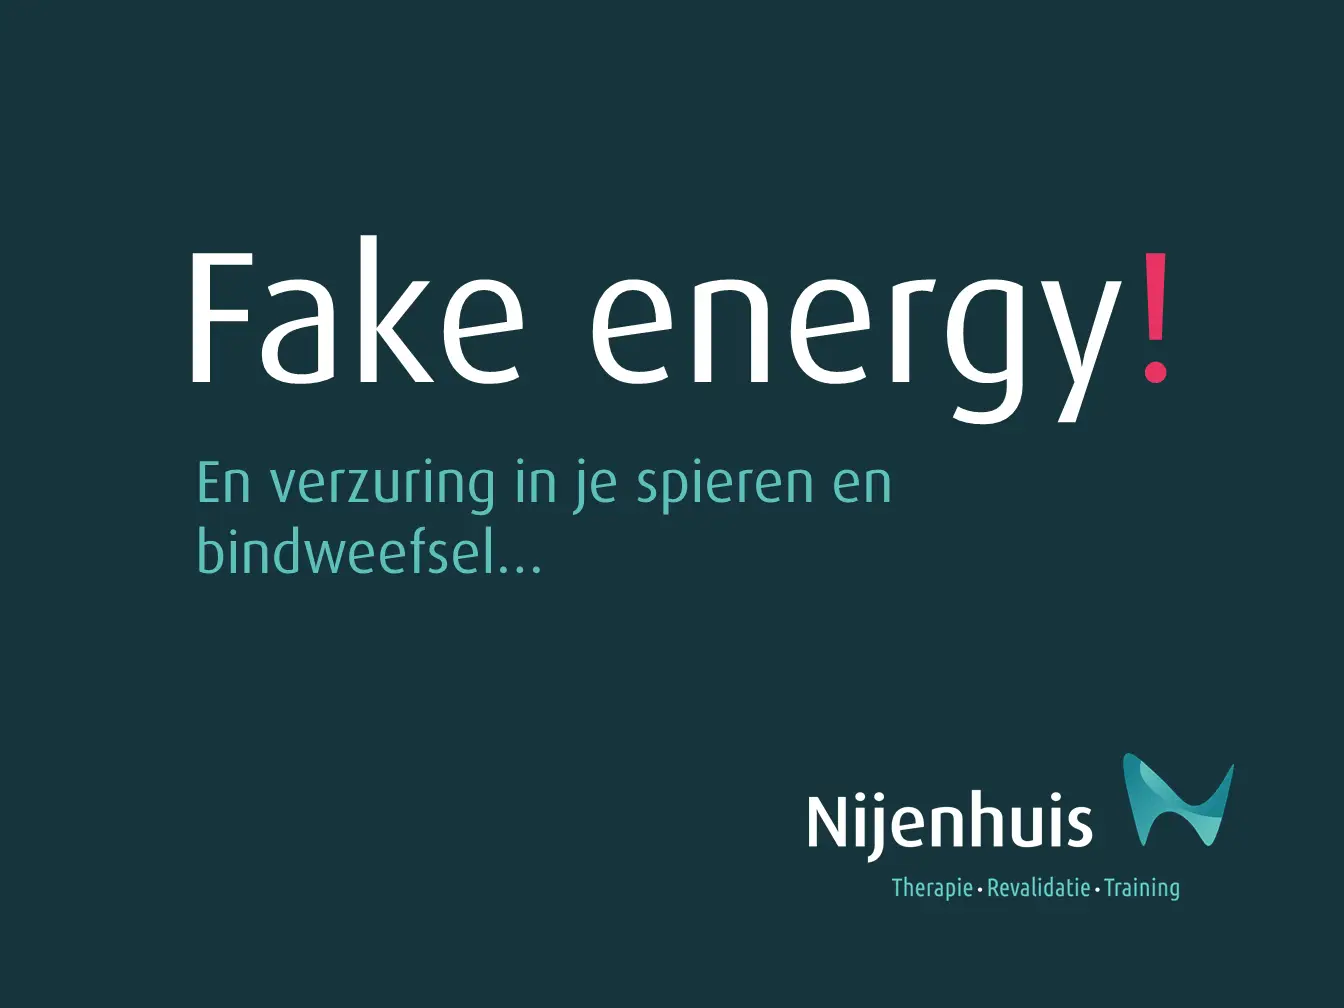 Fake energy